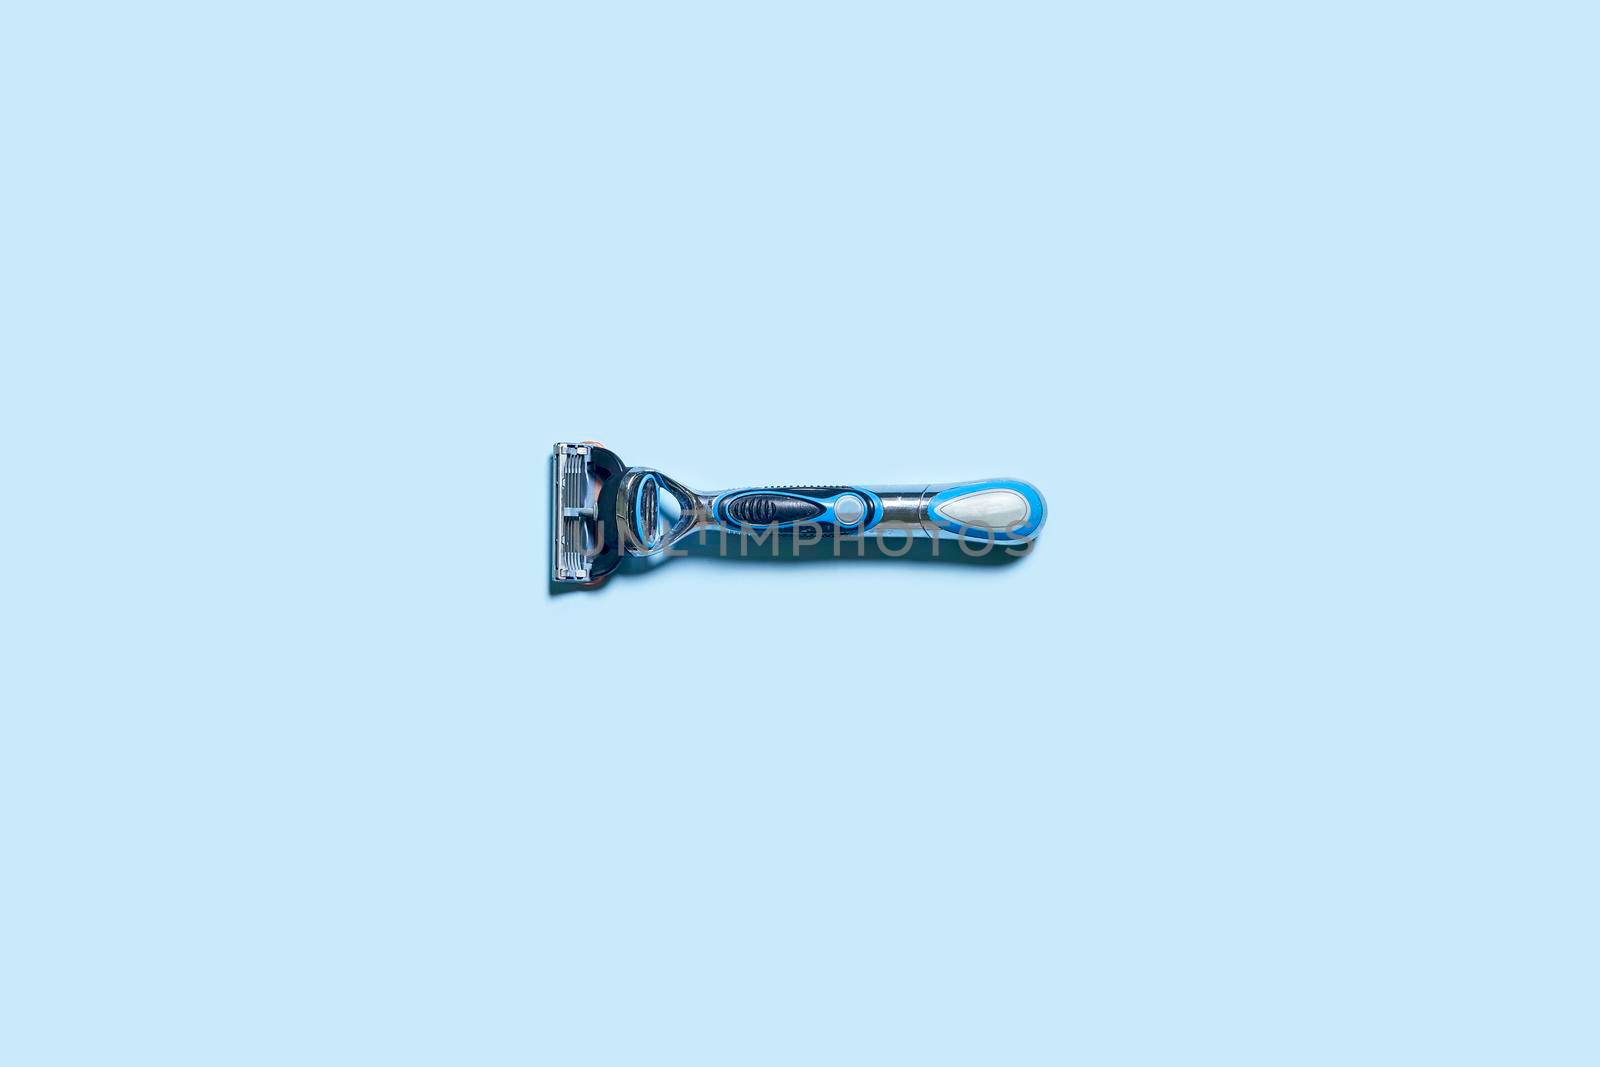 Mens shaving razor. A multiple use shaving razor on blue background. View from above